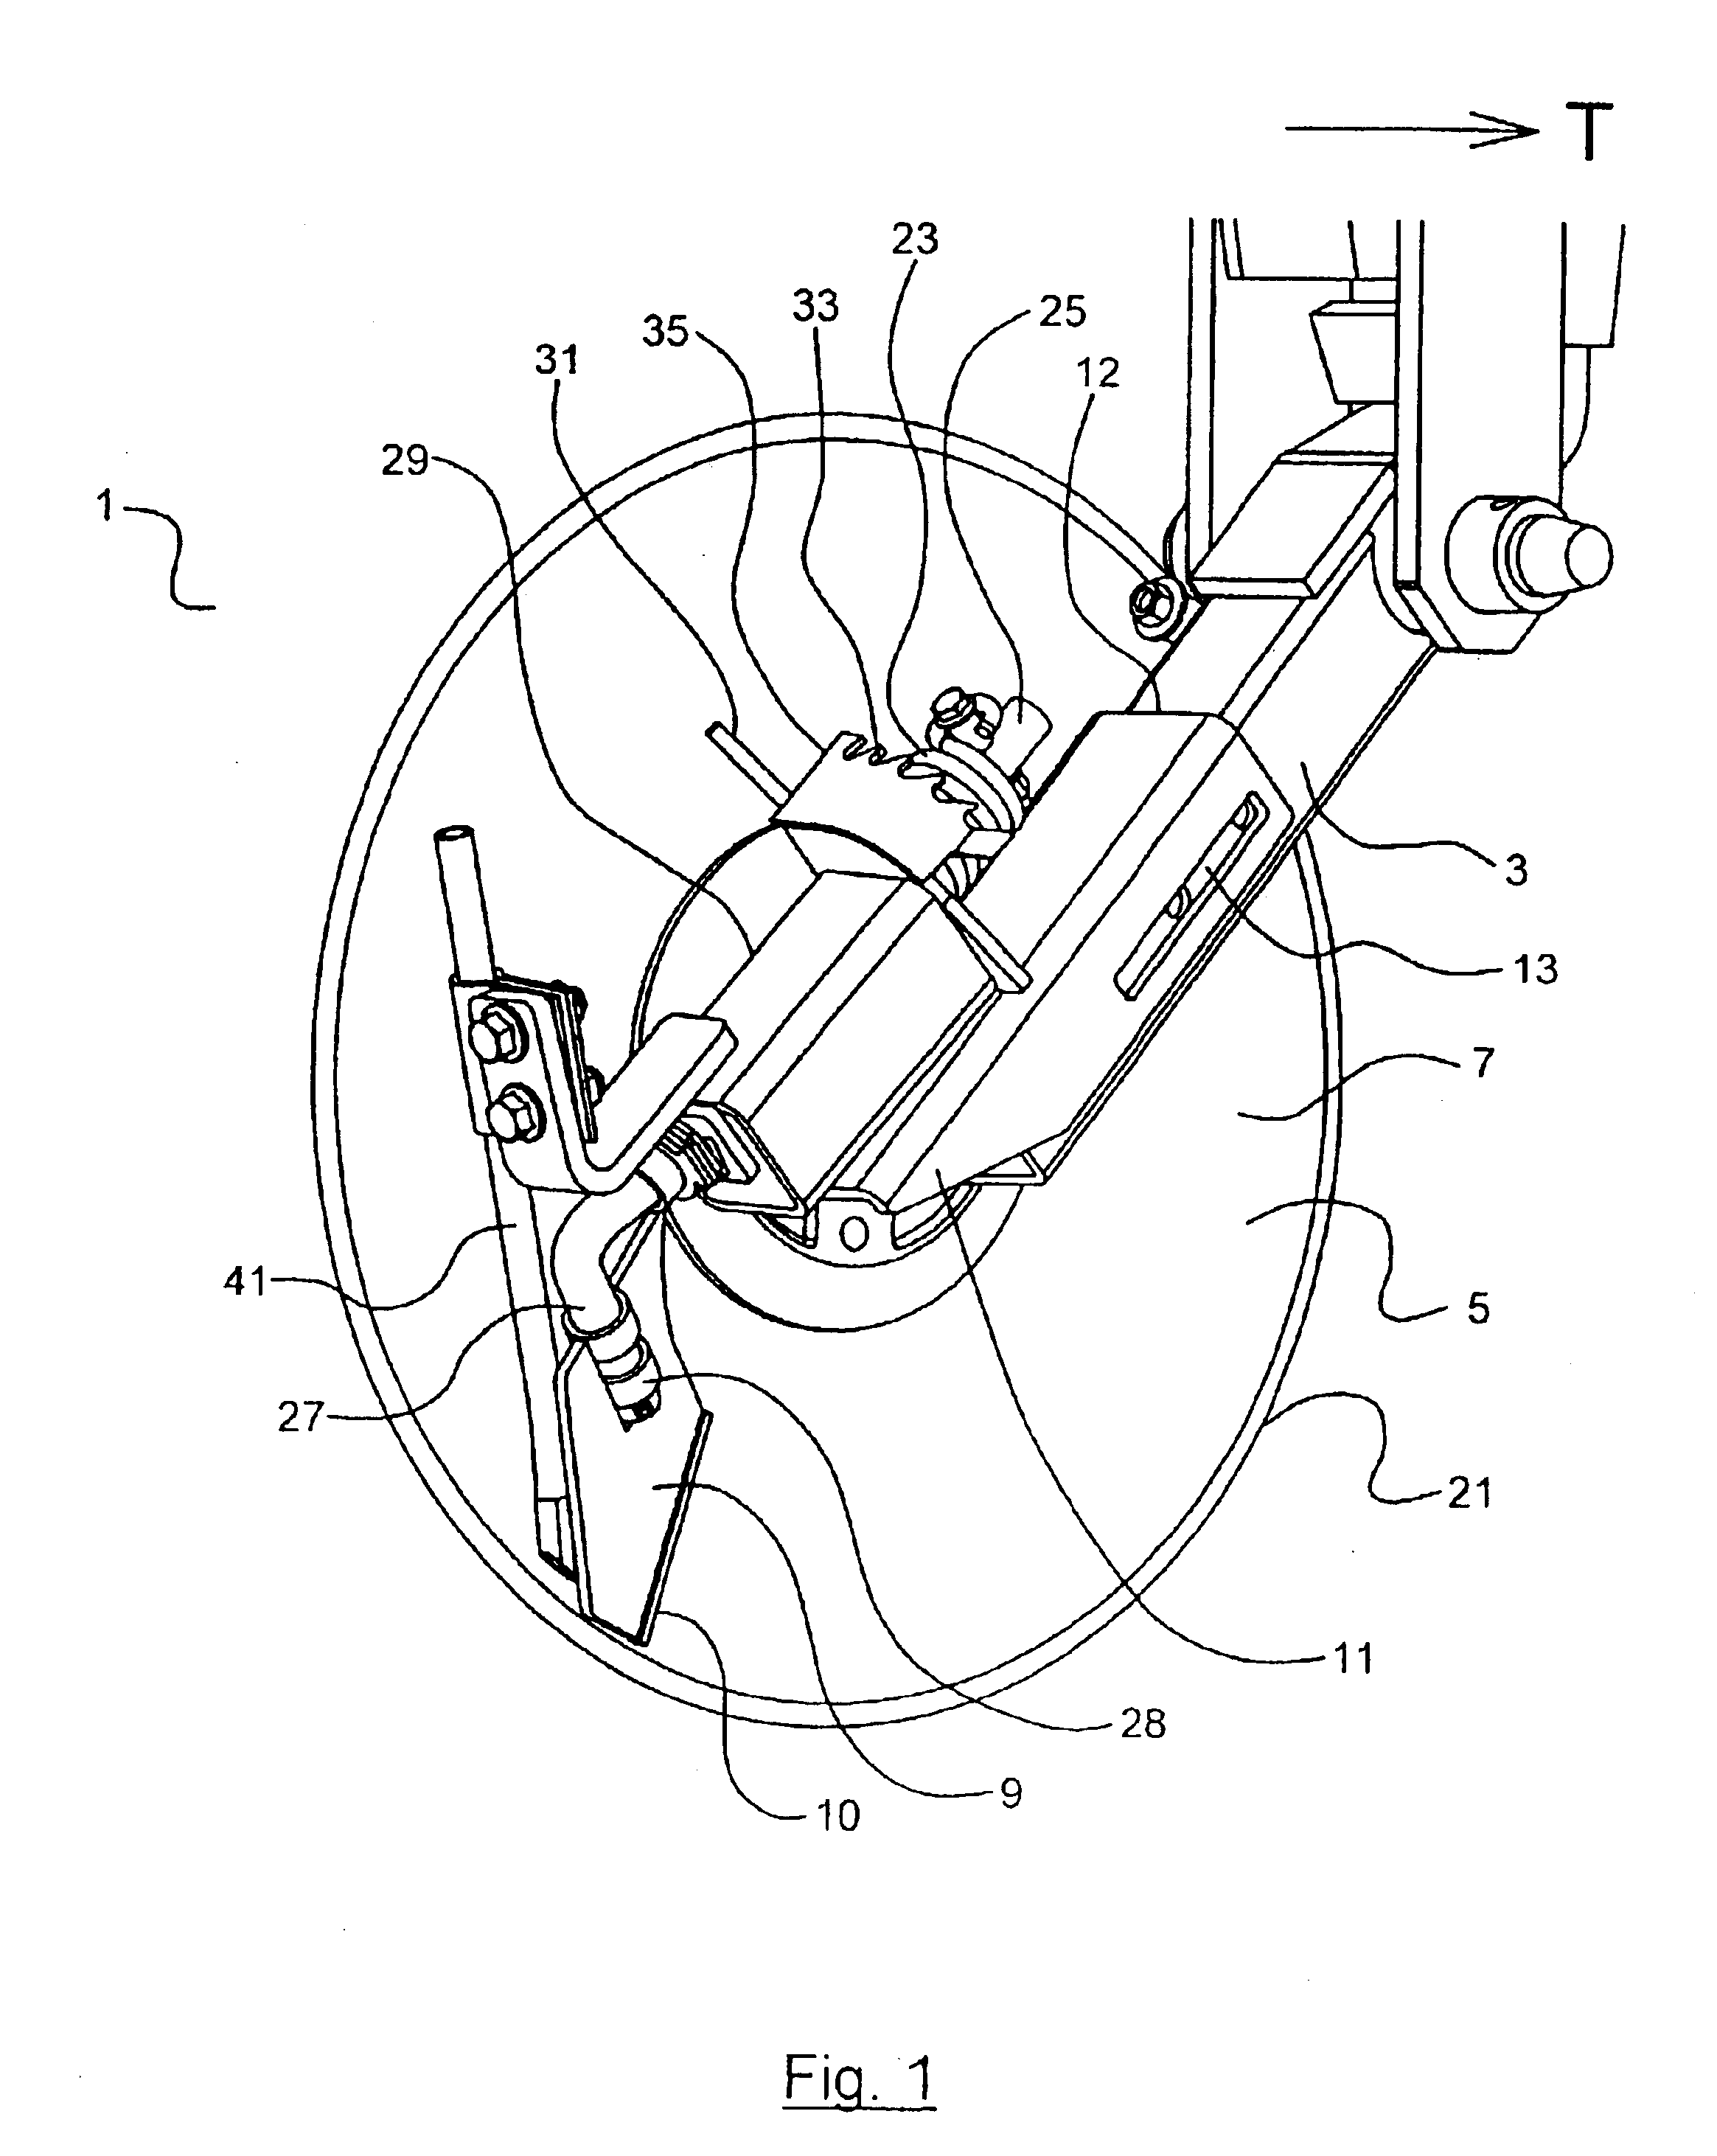 Disc furrow opener scraper positioning system